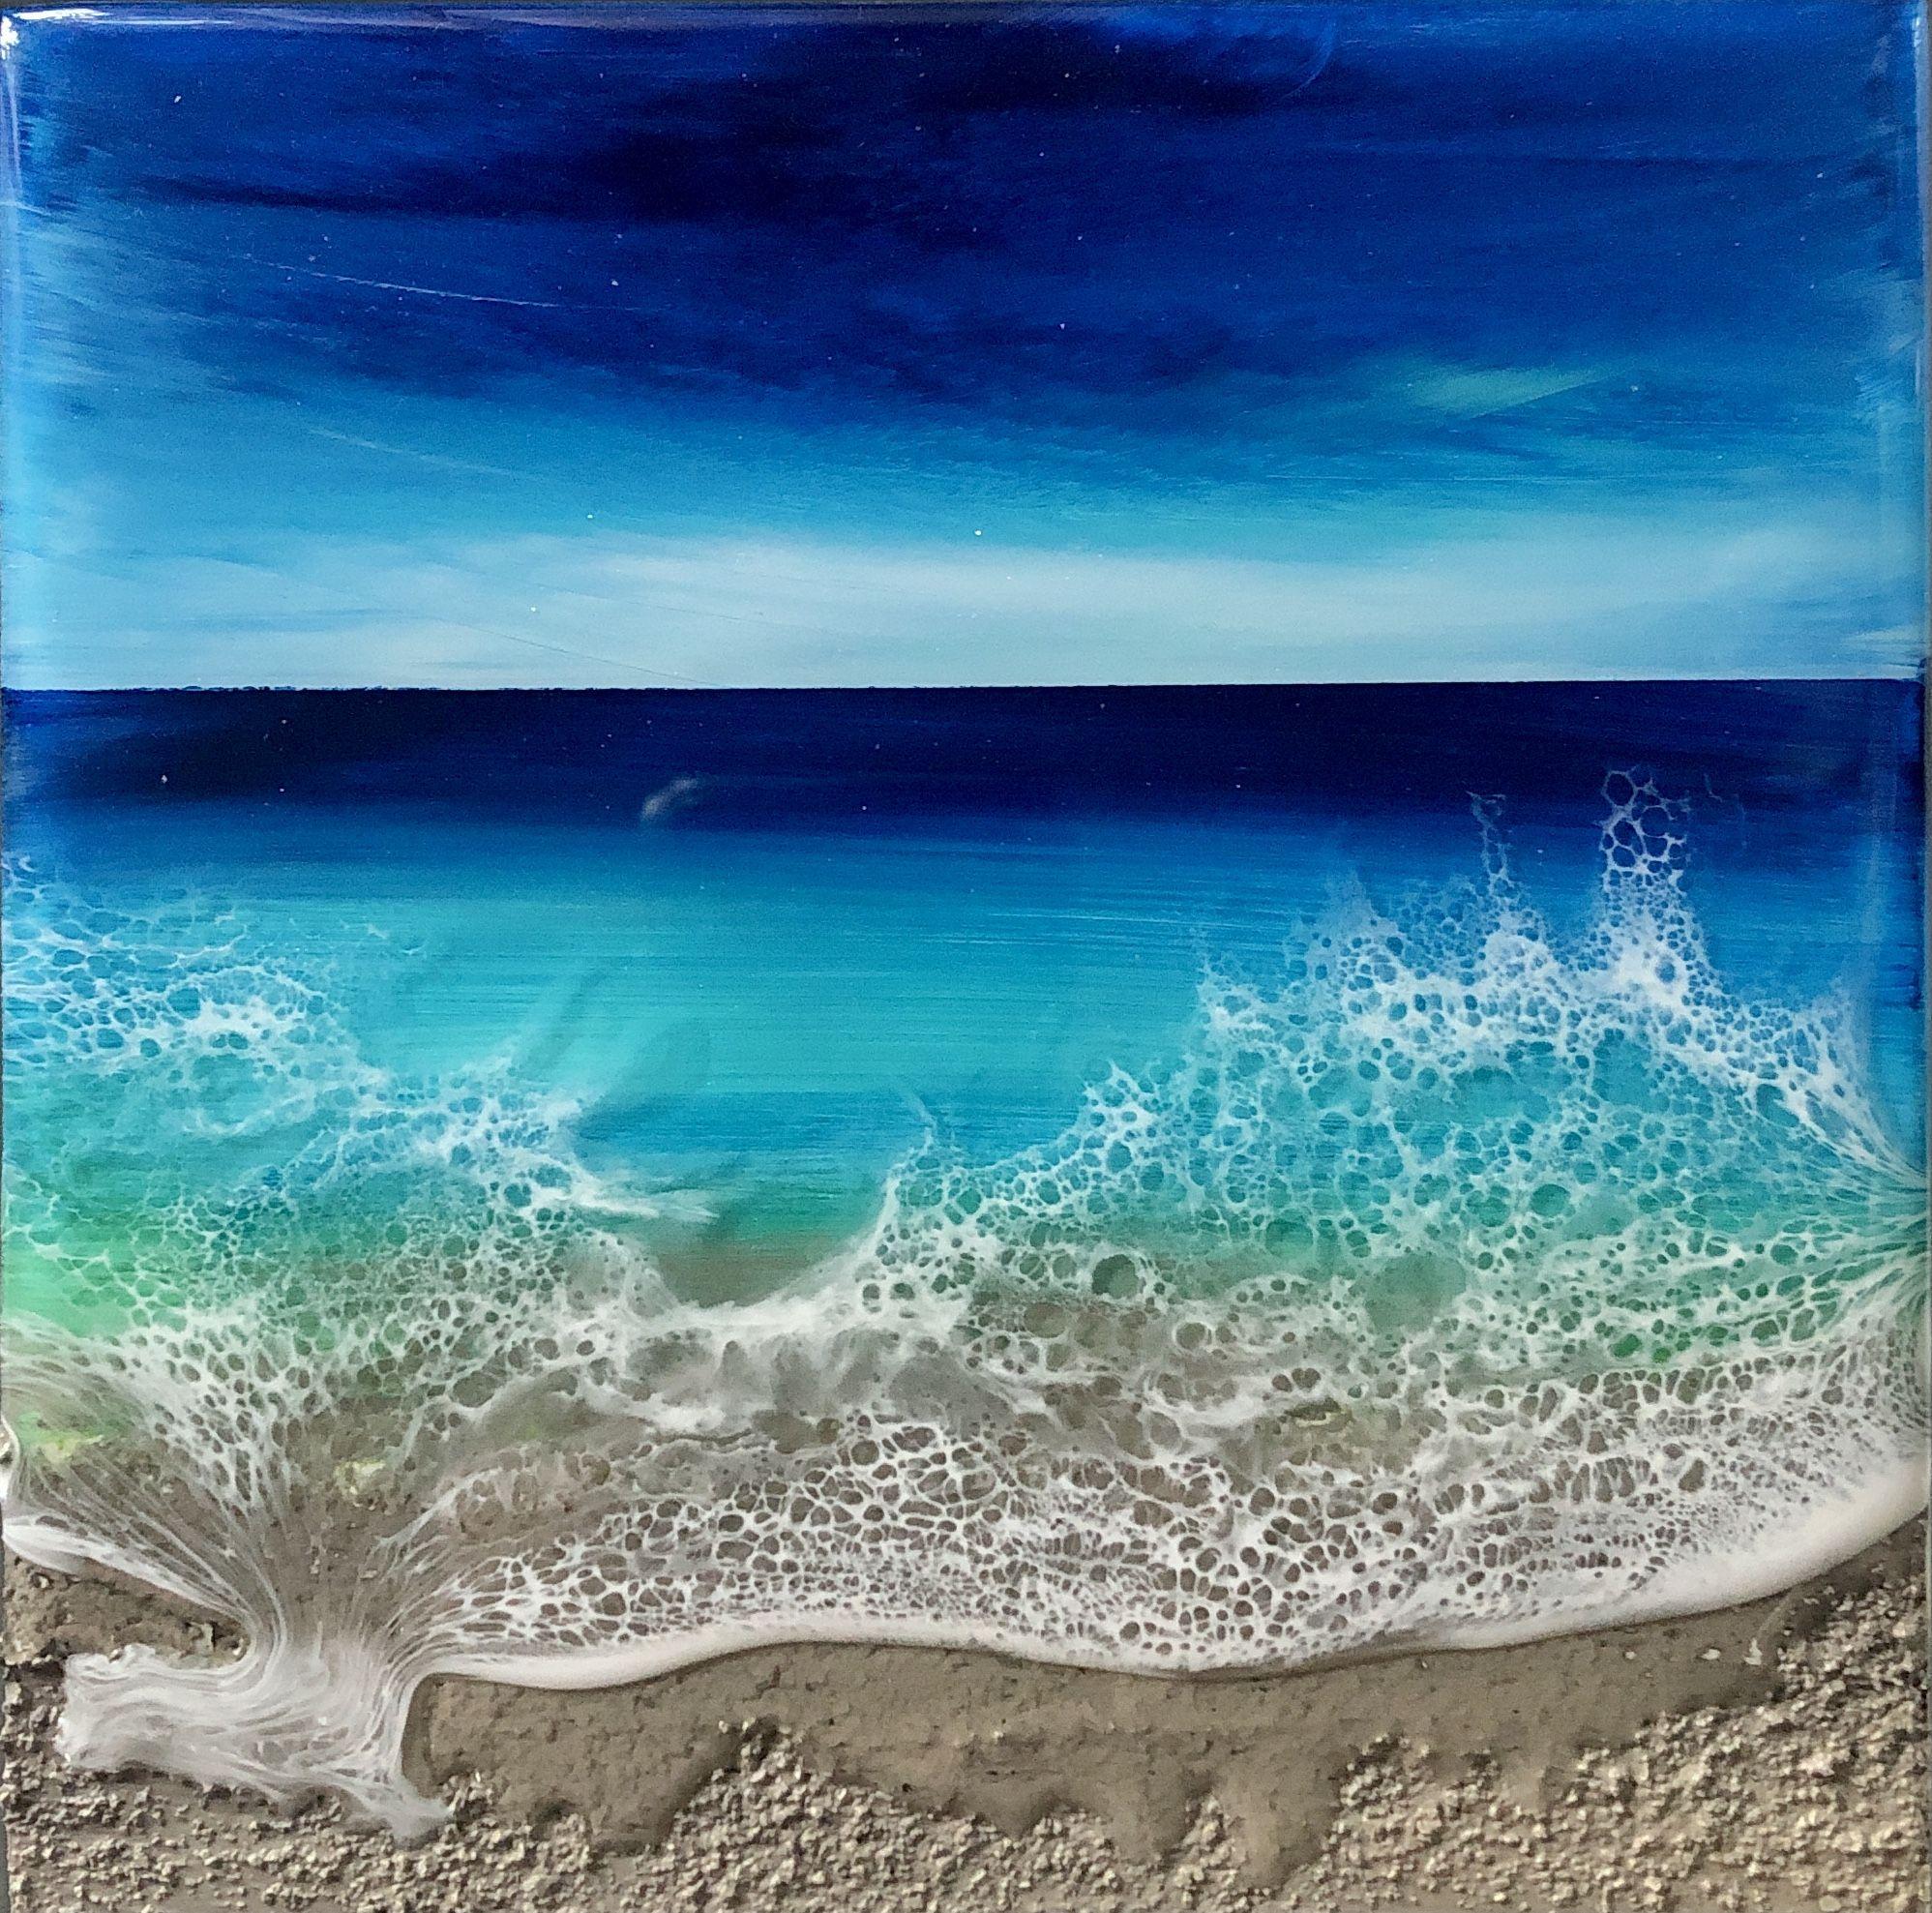 Ocean Waves, Mixed Media on Wood Panel - Mixed Media Art by Ana Hefco